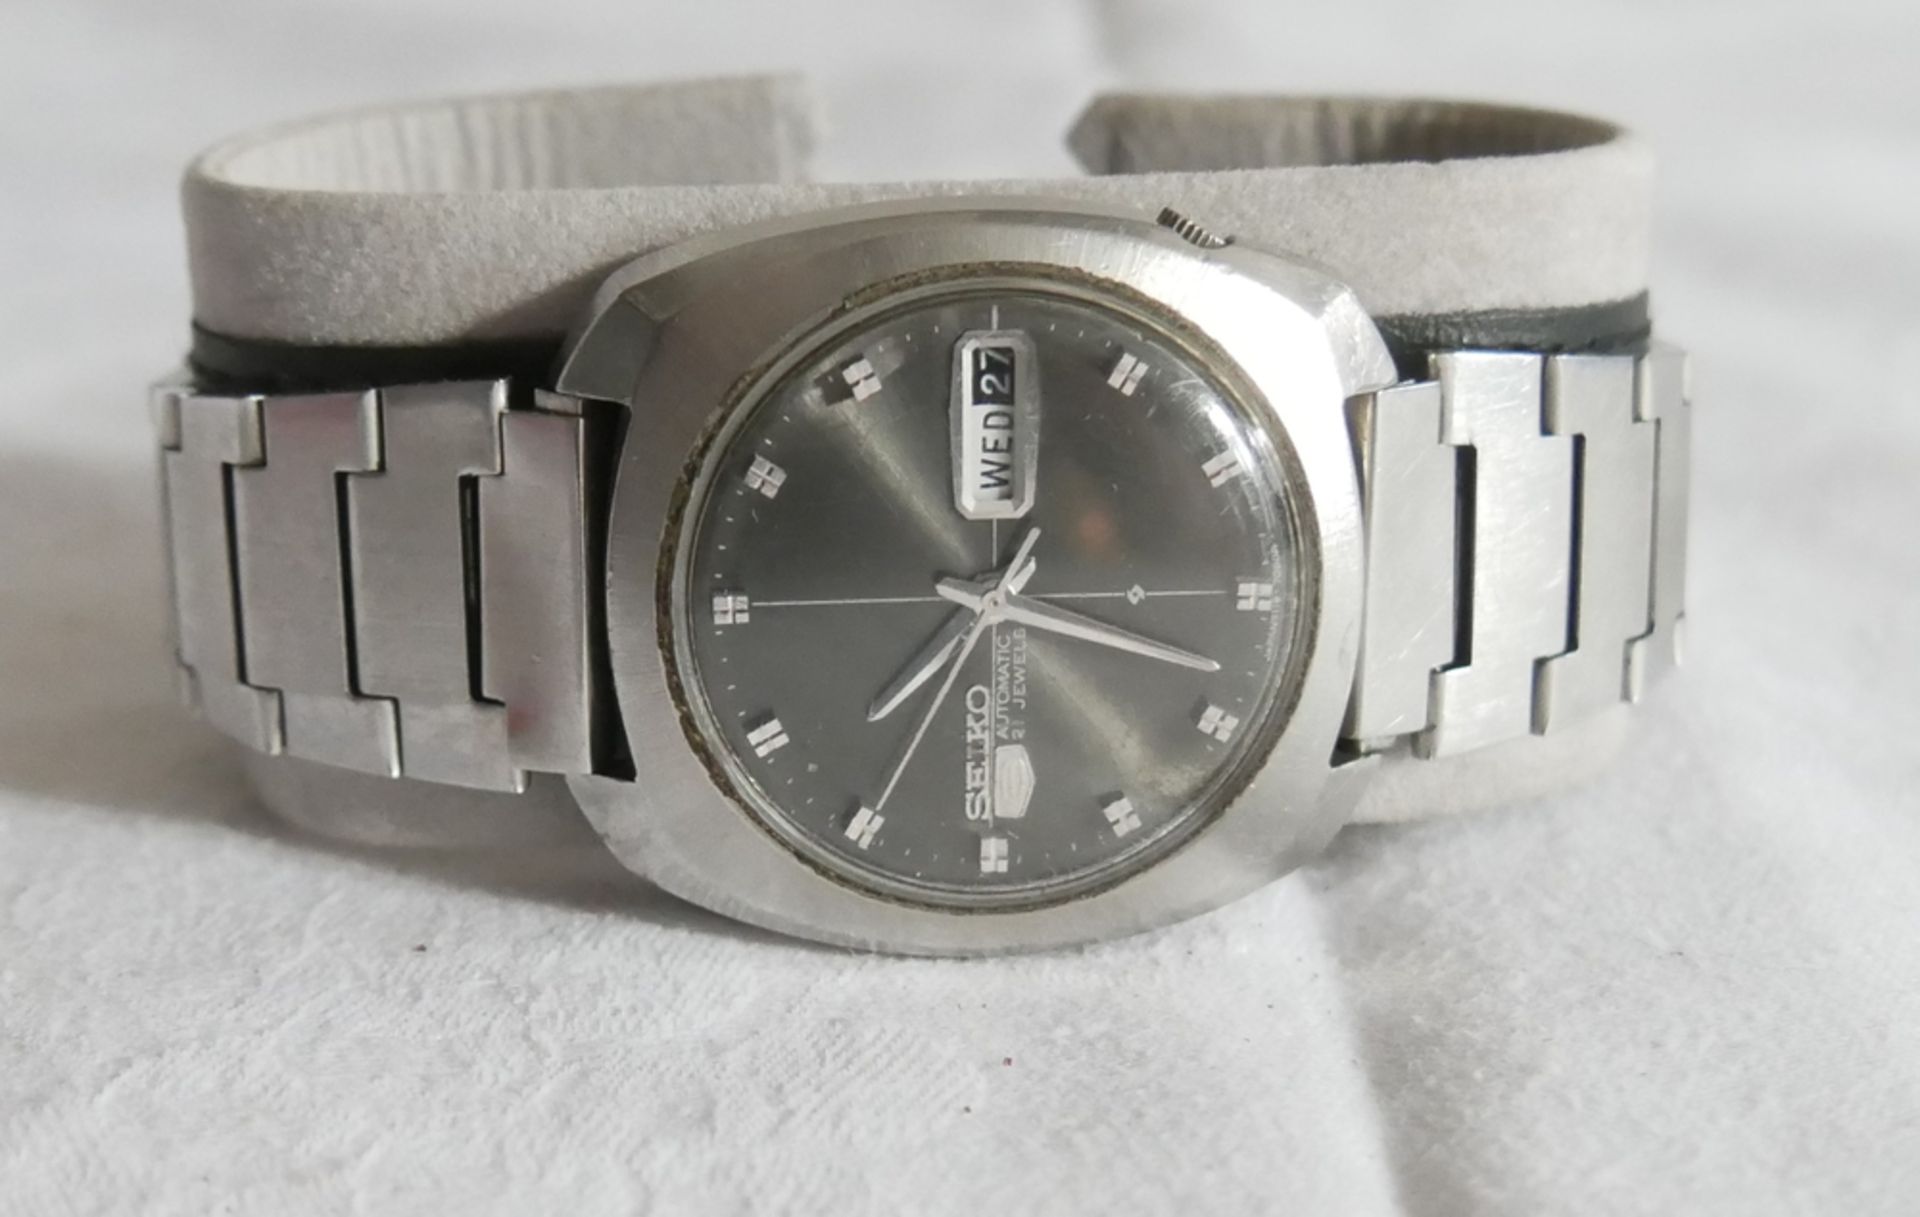 Vintage Sammler Herren Armbanduhr "Seiko 5" Automatik Edelstahl. Funktion geprüft, getragener